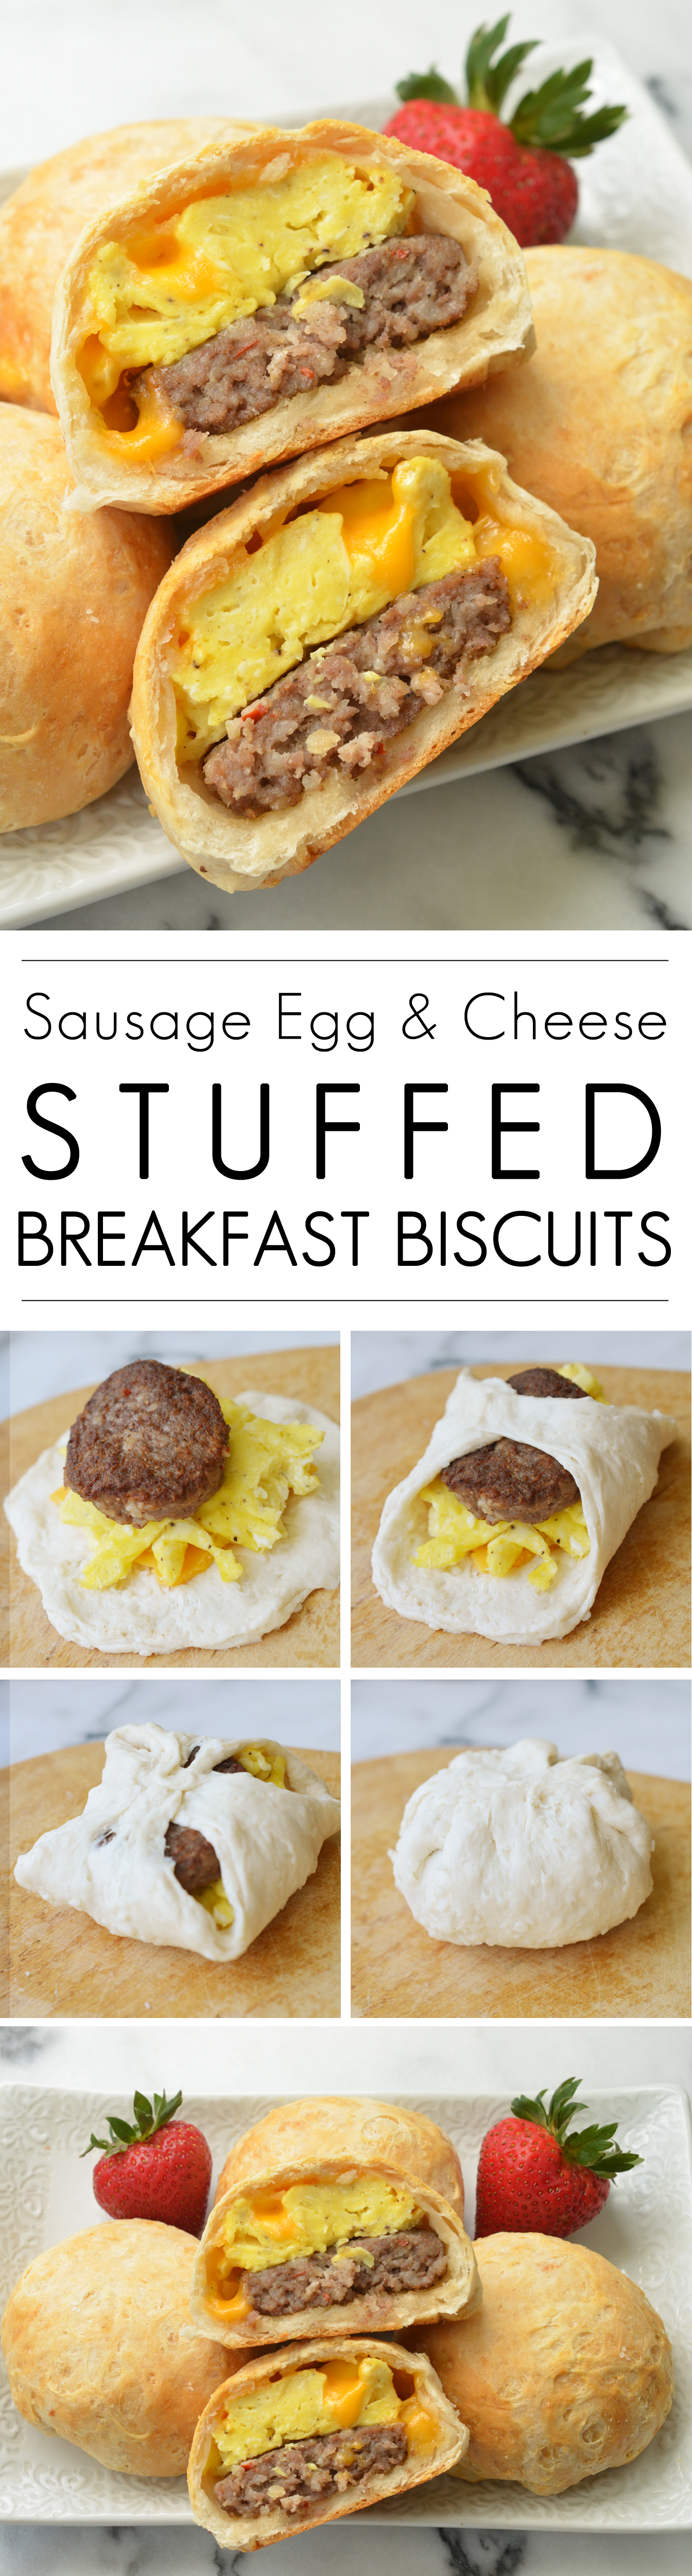 sausage egg stuffed breakfast biscuits: a make-ahead breakfast idea